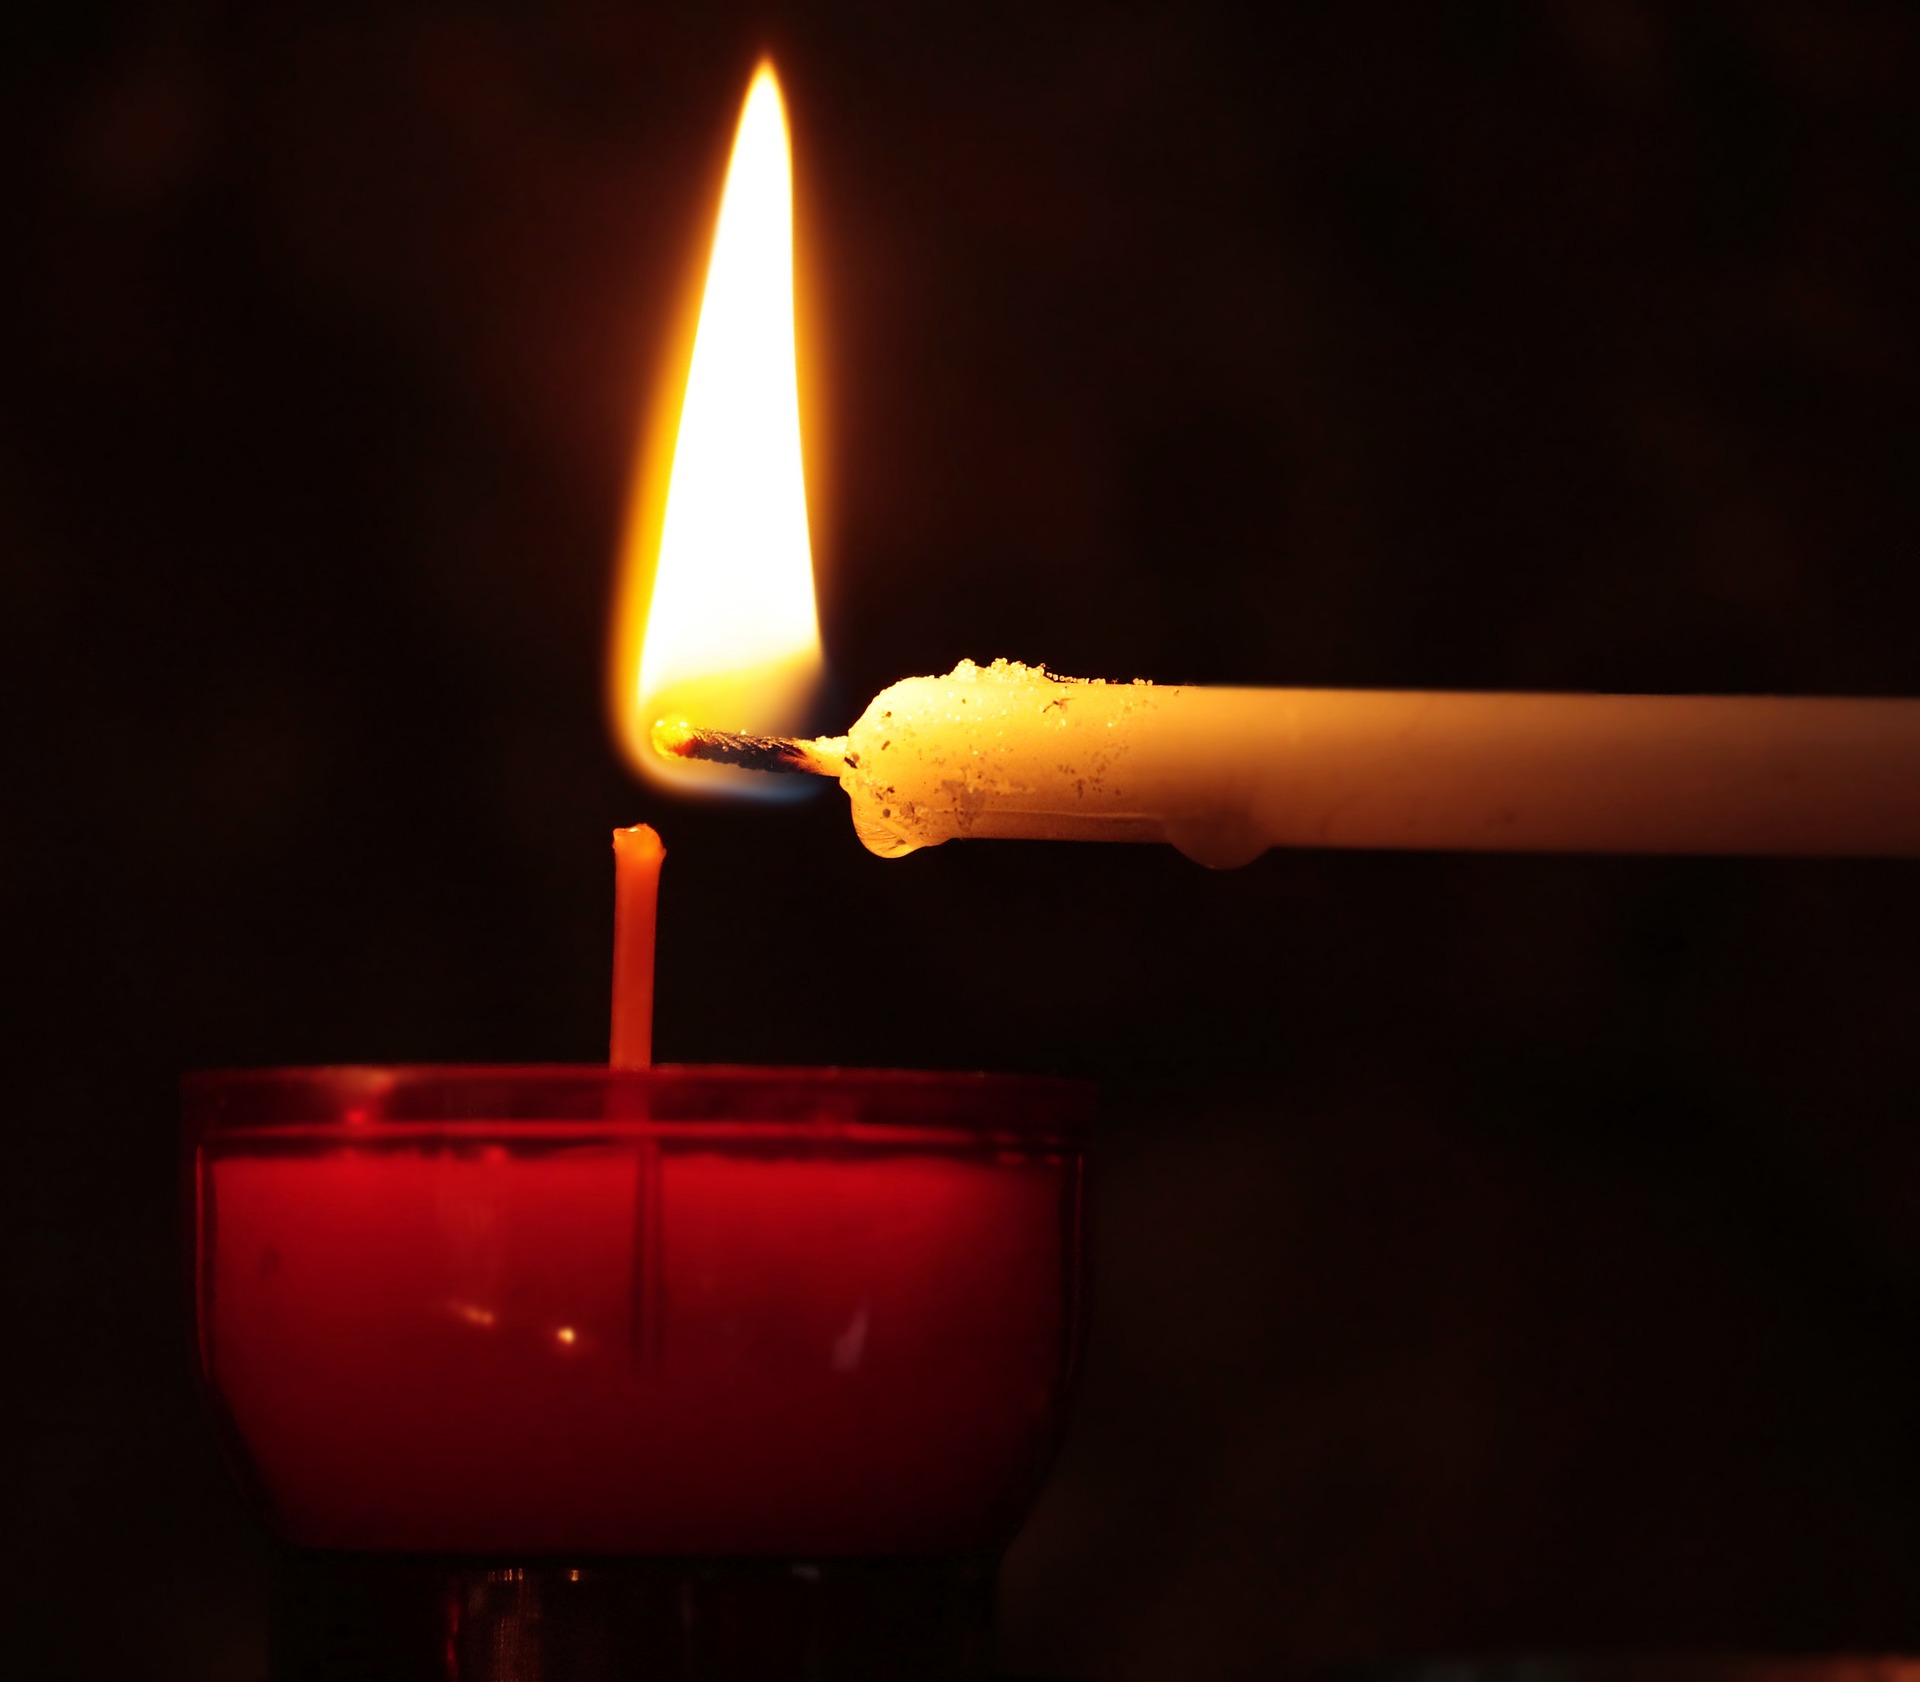 Lighting of candle